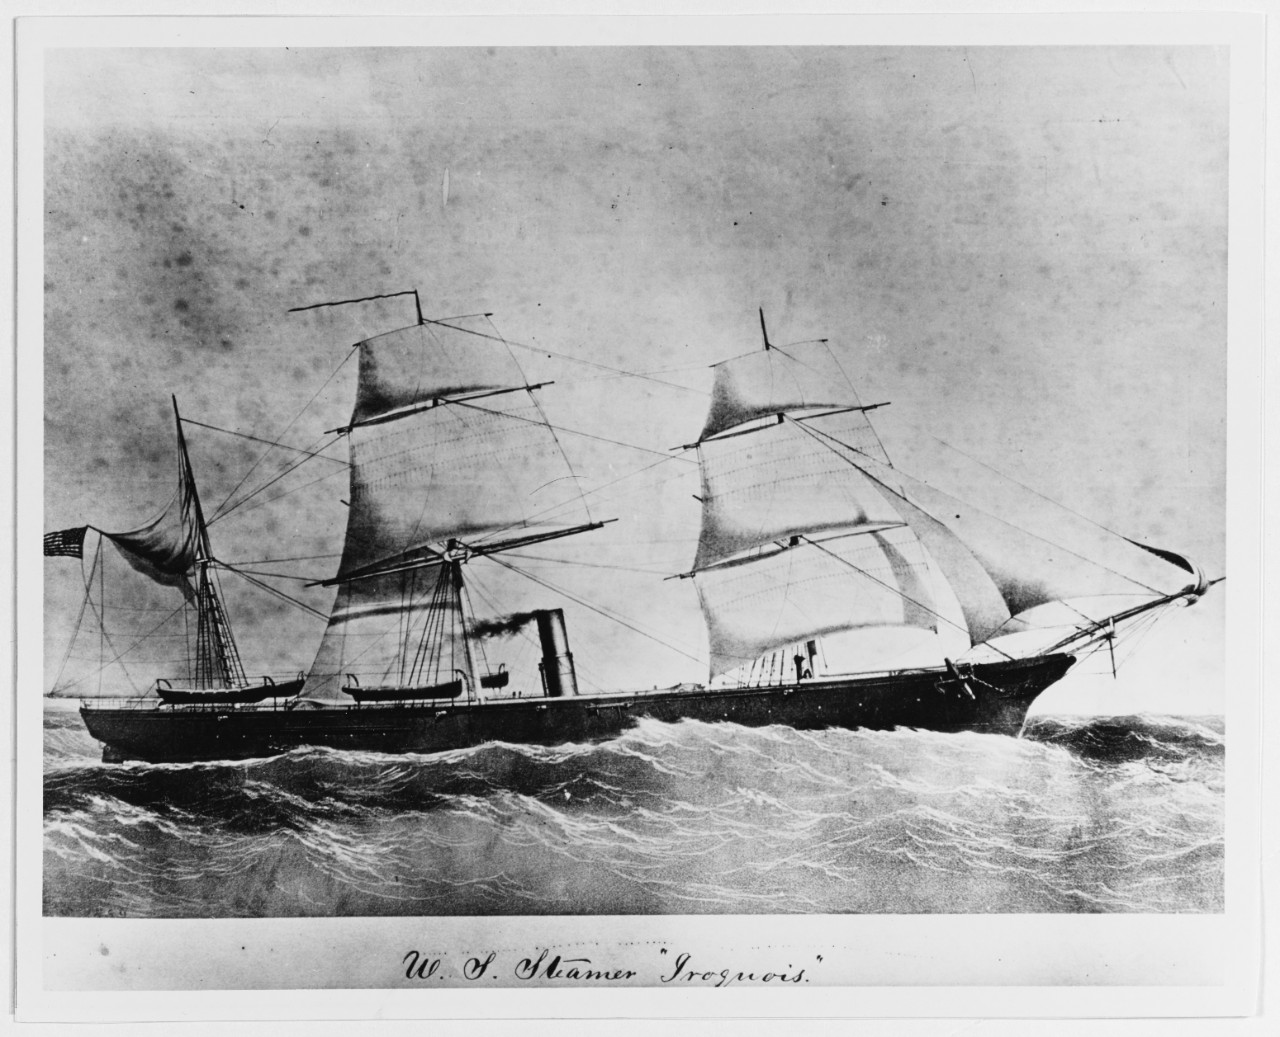 USS IROQUOIS (1859-1910)